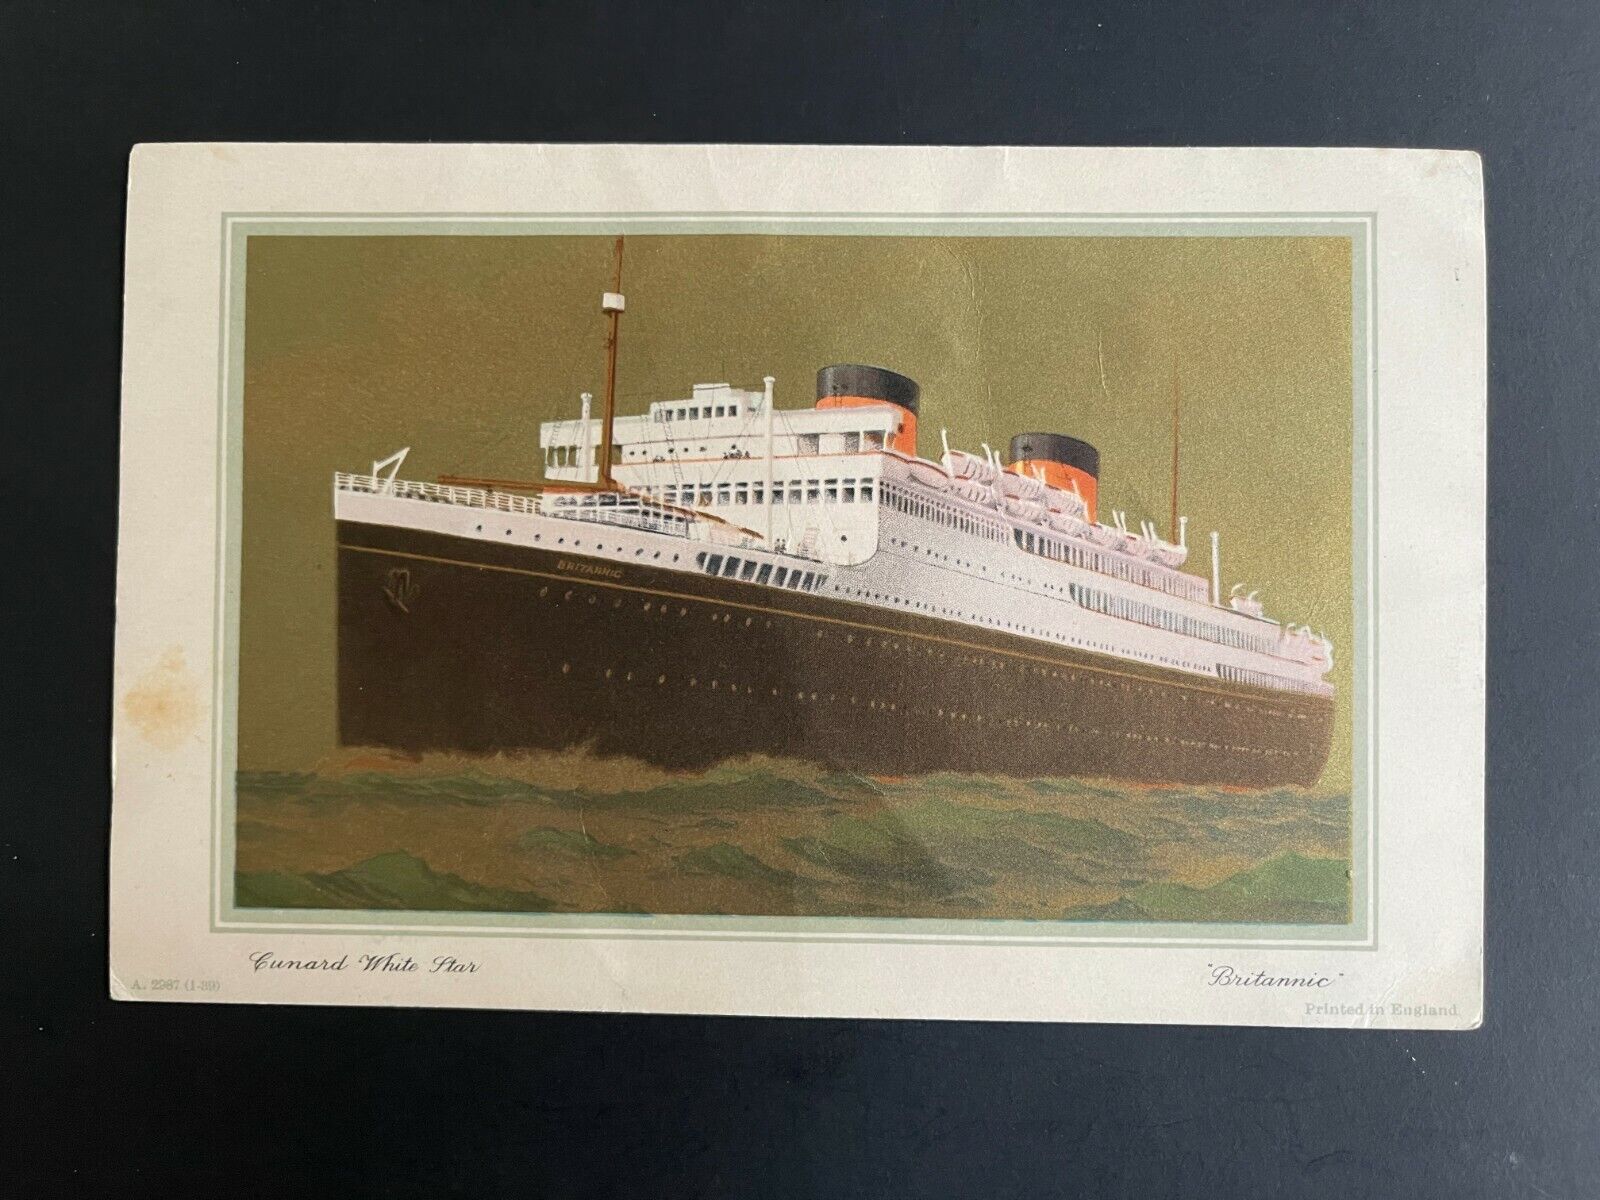 RMS BRITANNIC - CUNARD WHITE STAR LINE | 1949 Abstract Log